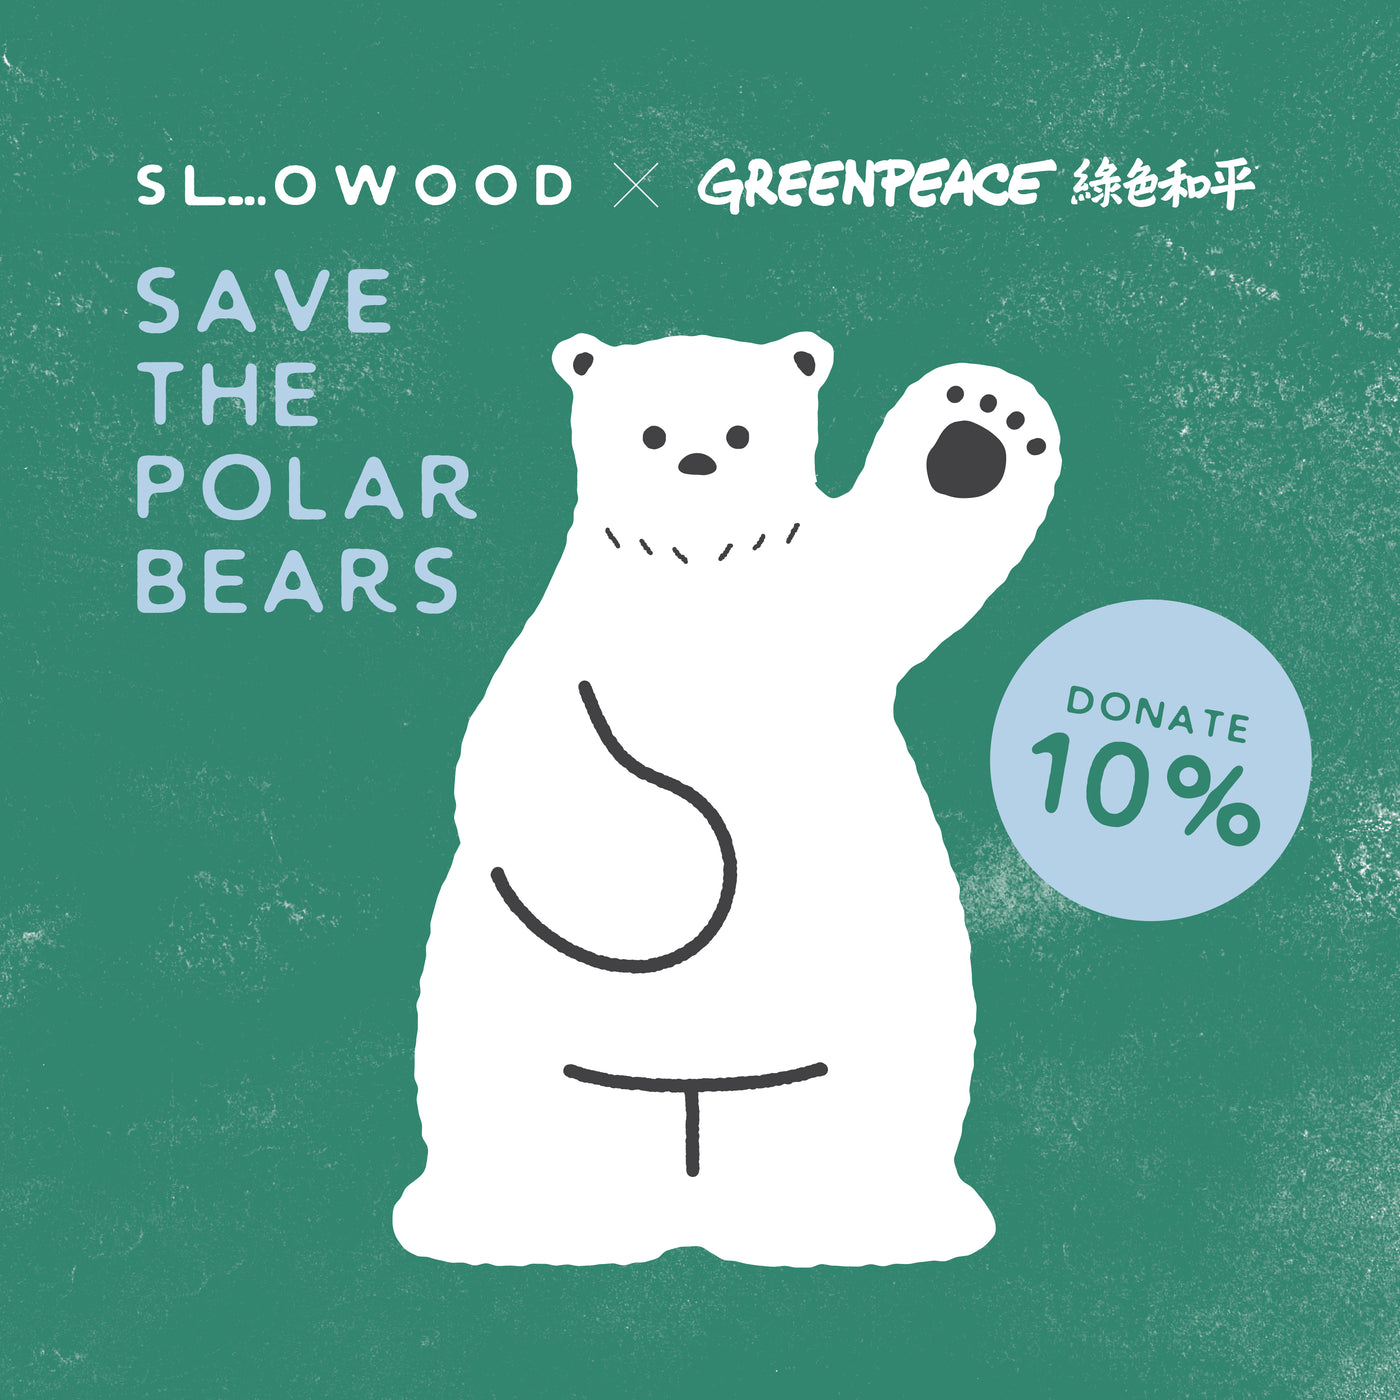 Slowood x Greenpeace